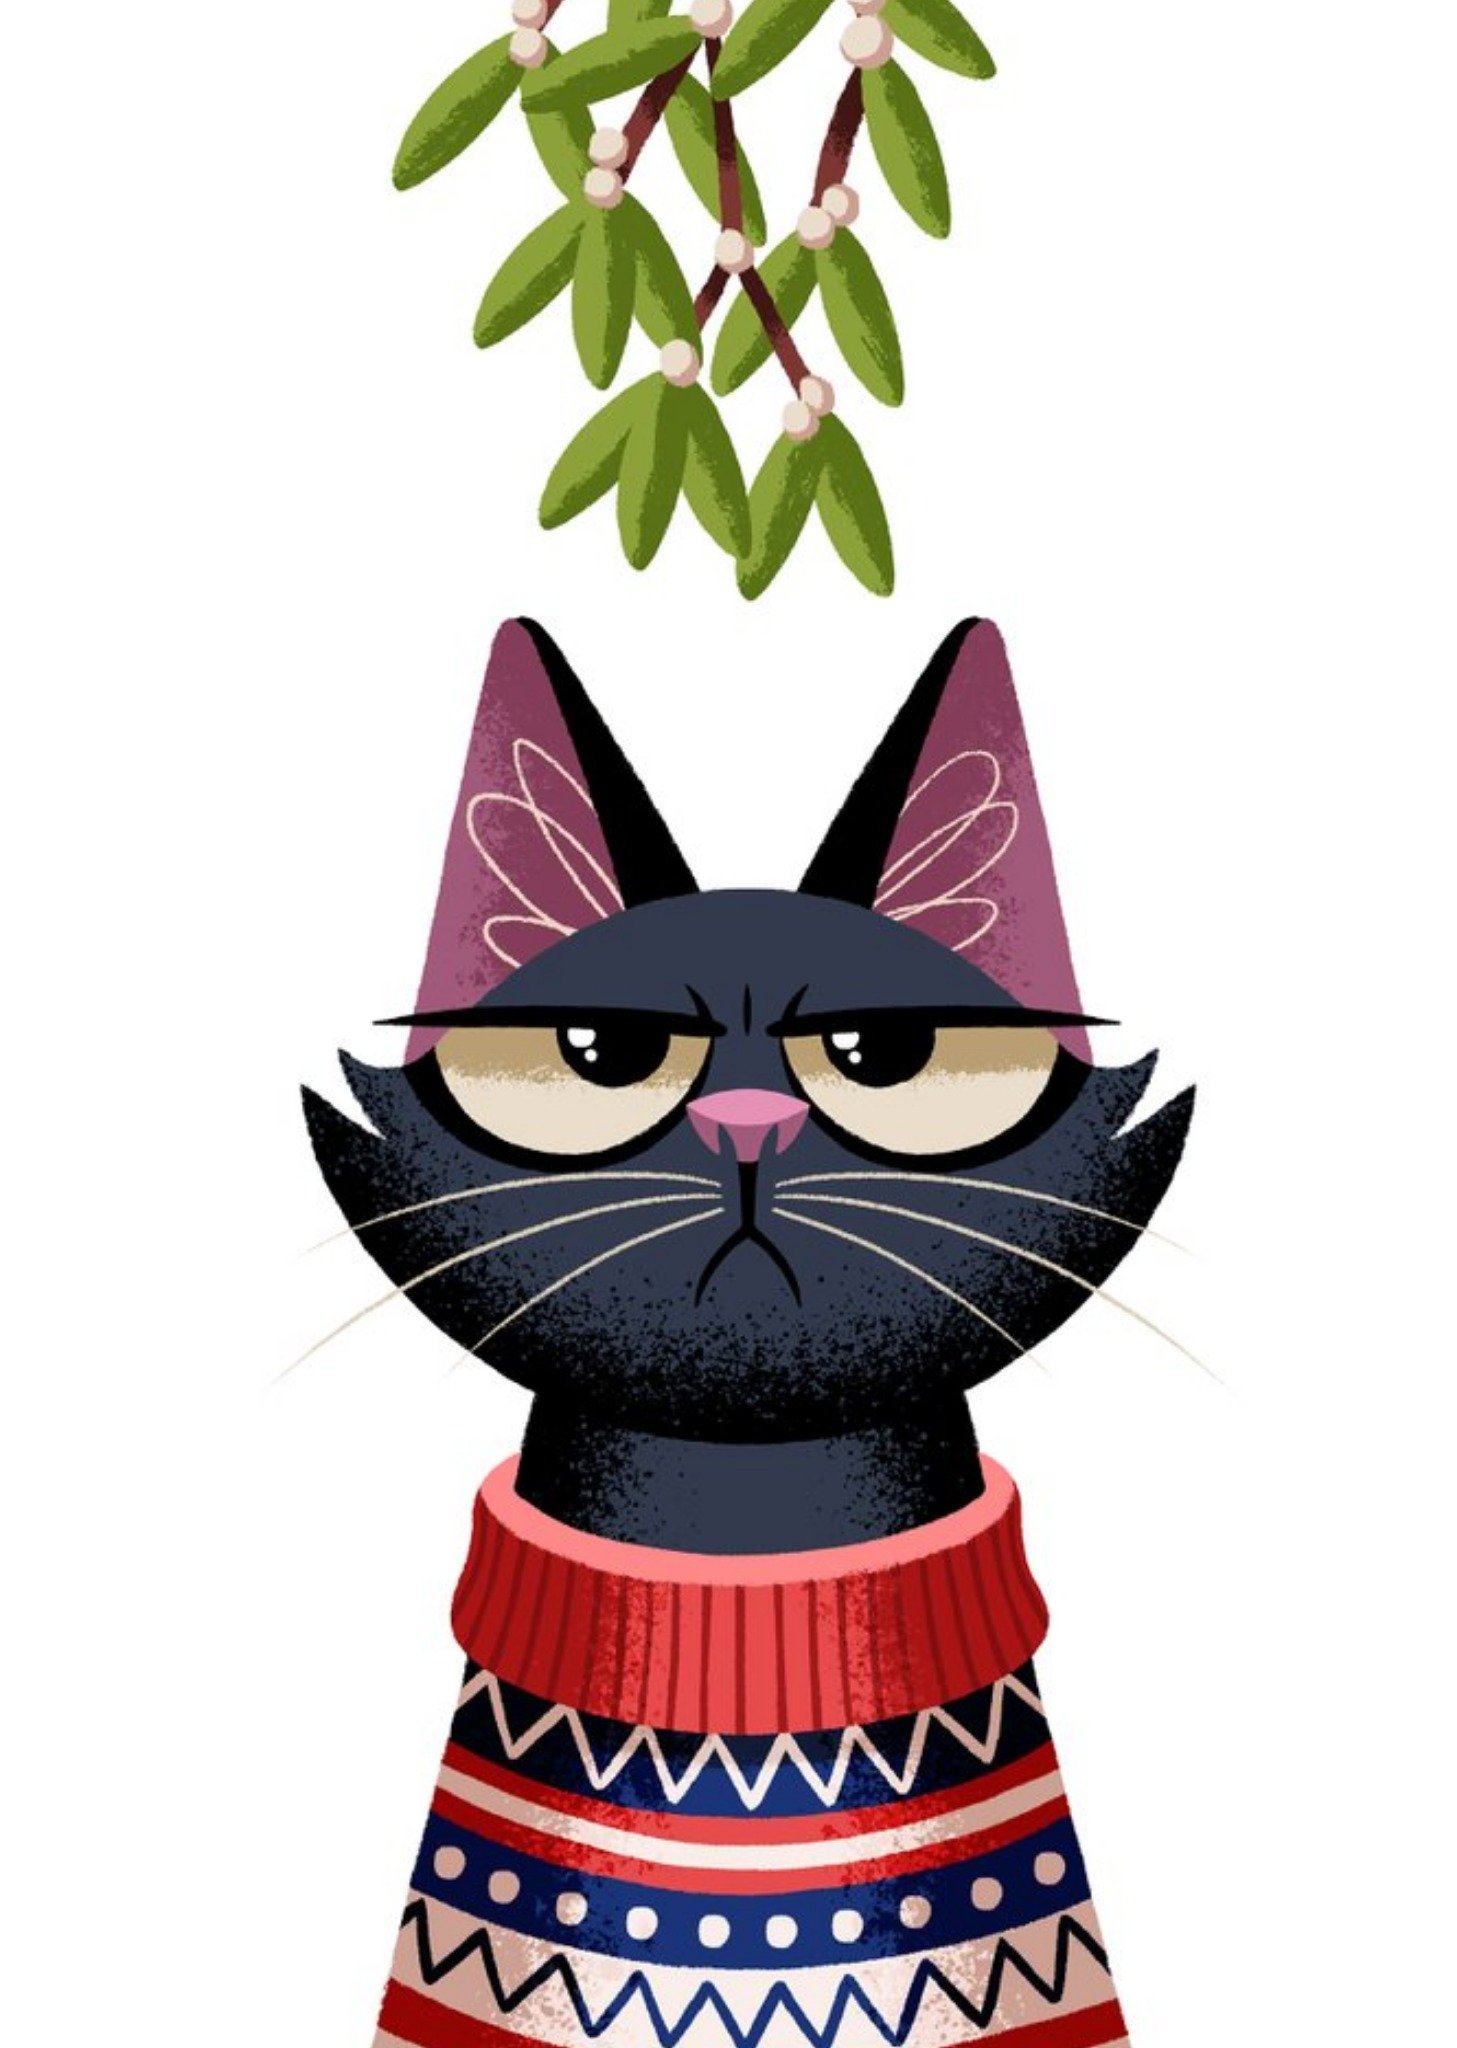 Moonpig Folio Cat Mistletoe Christmas Card Ecard